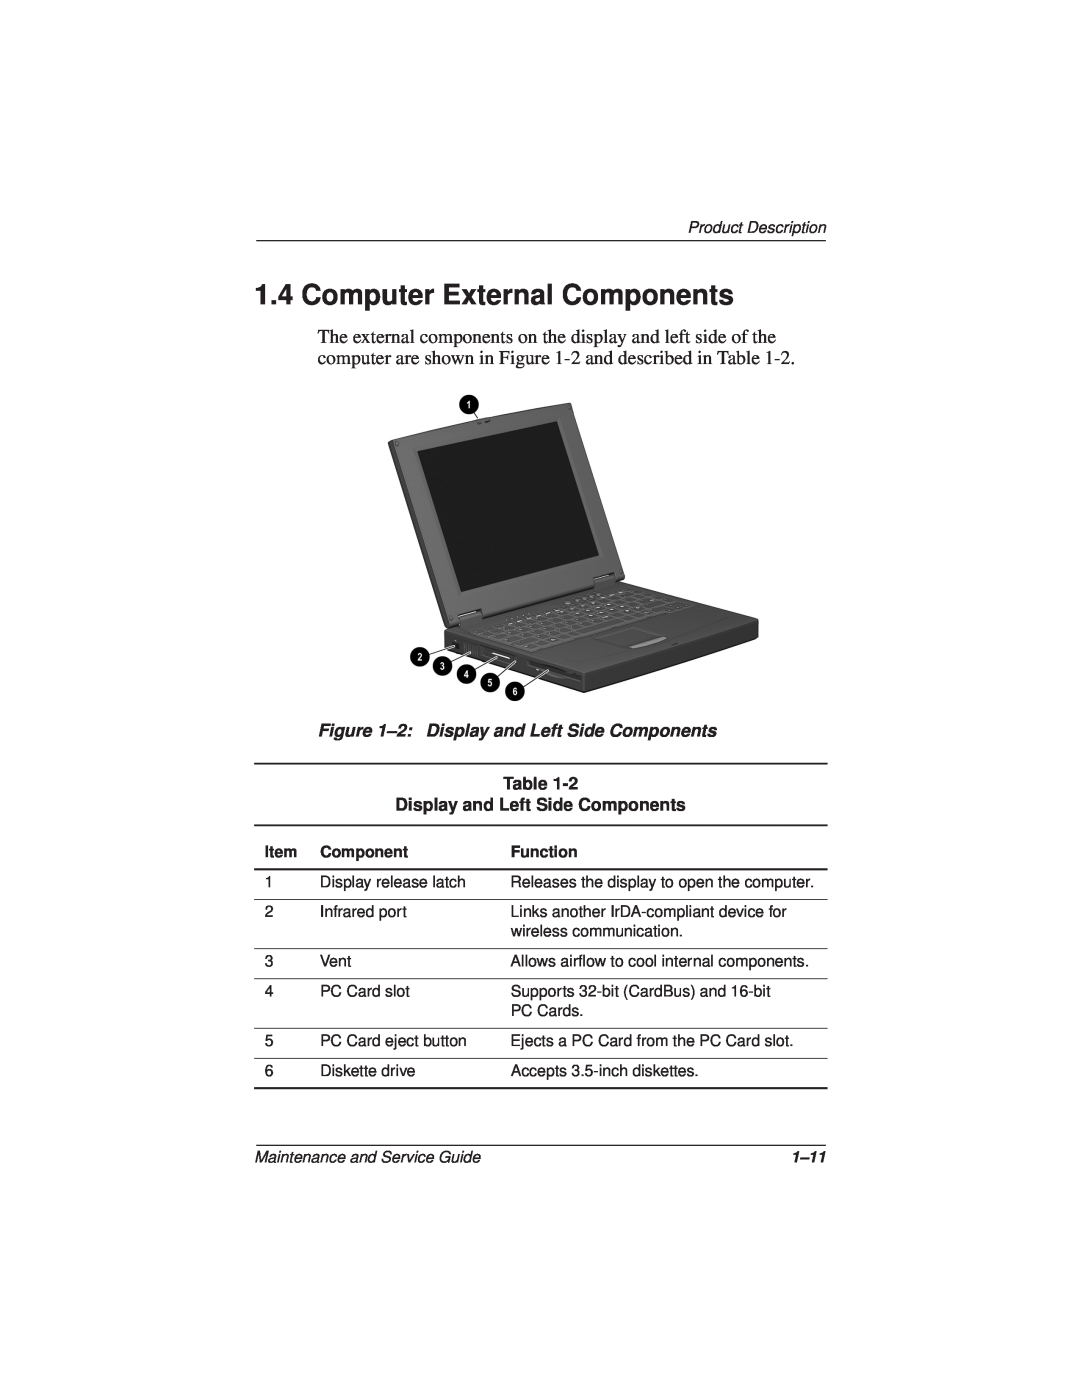 Compaq N110 manual Computer External Components, 2 Display and Left Side Components, Product Description 